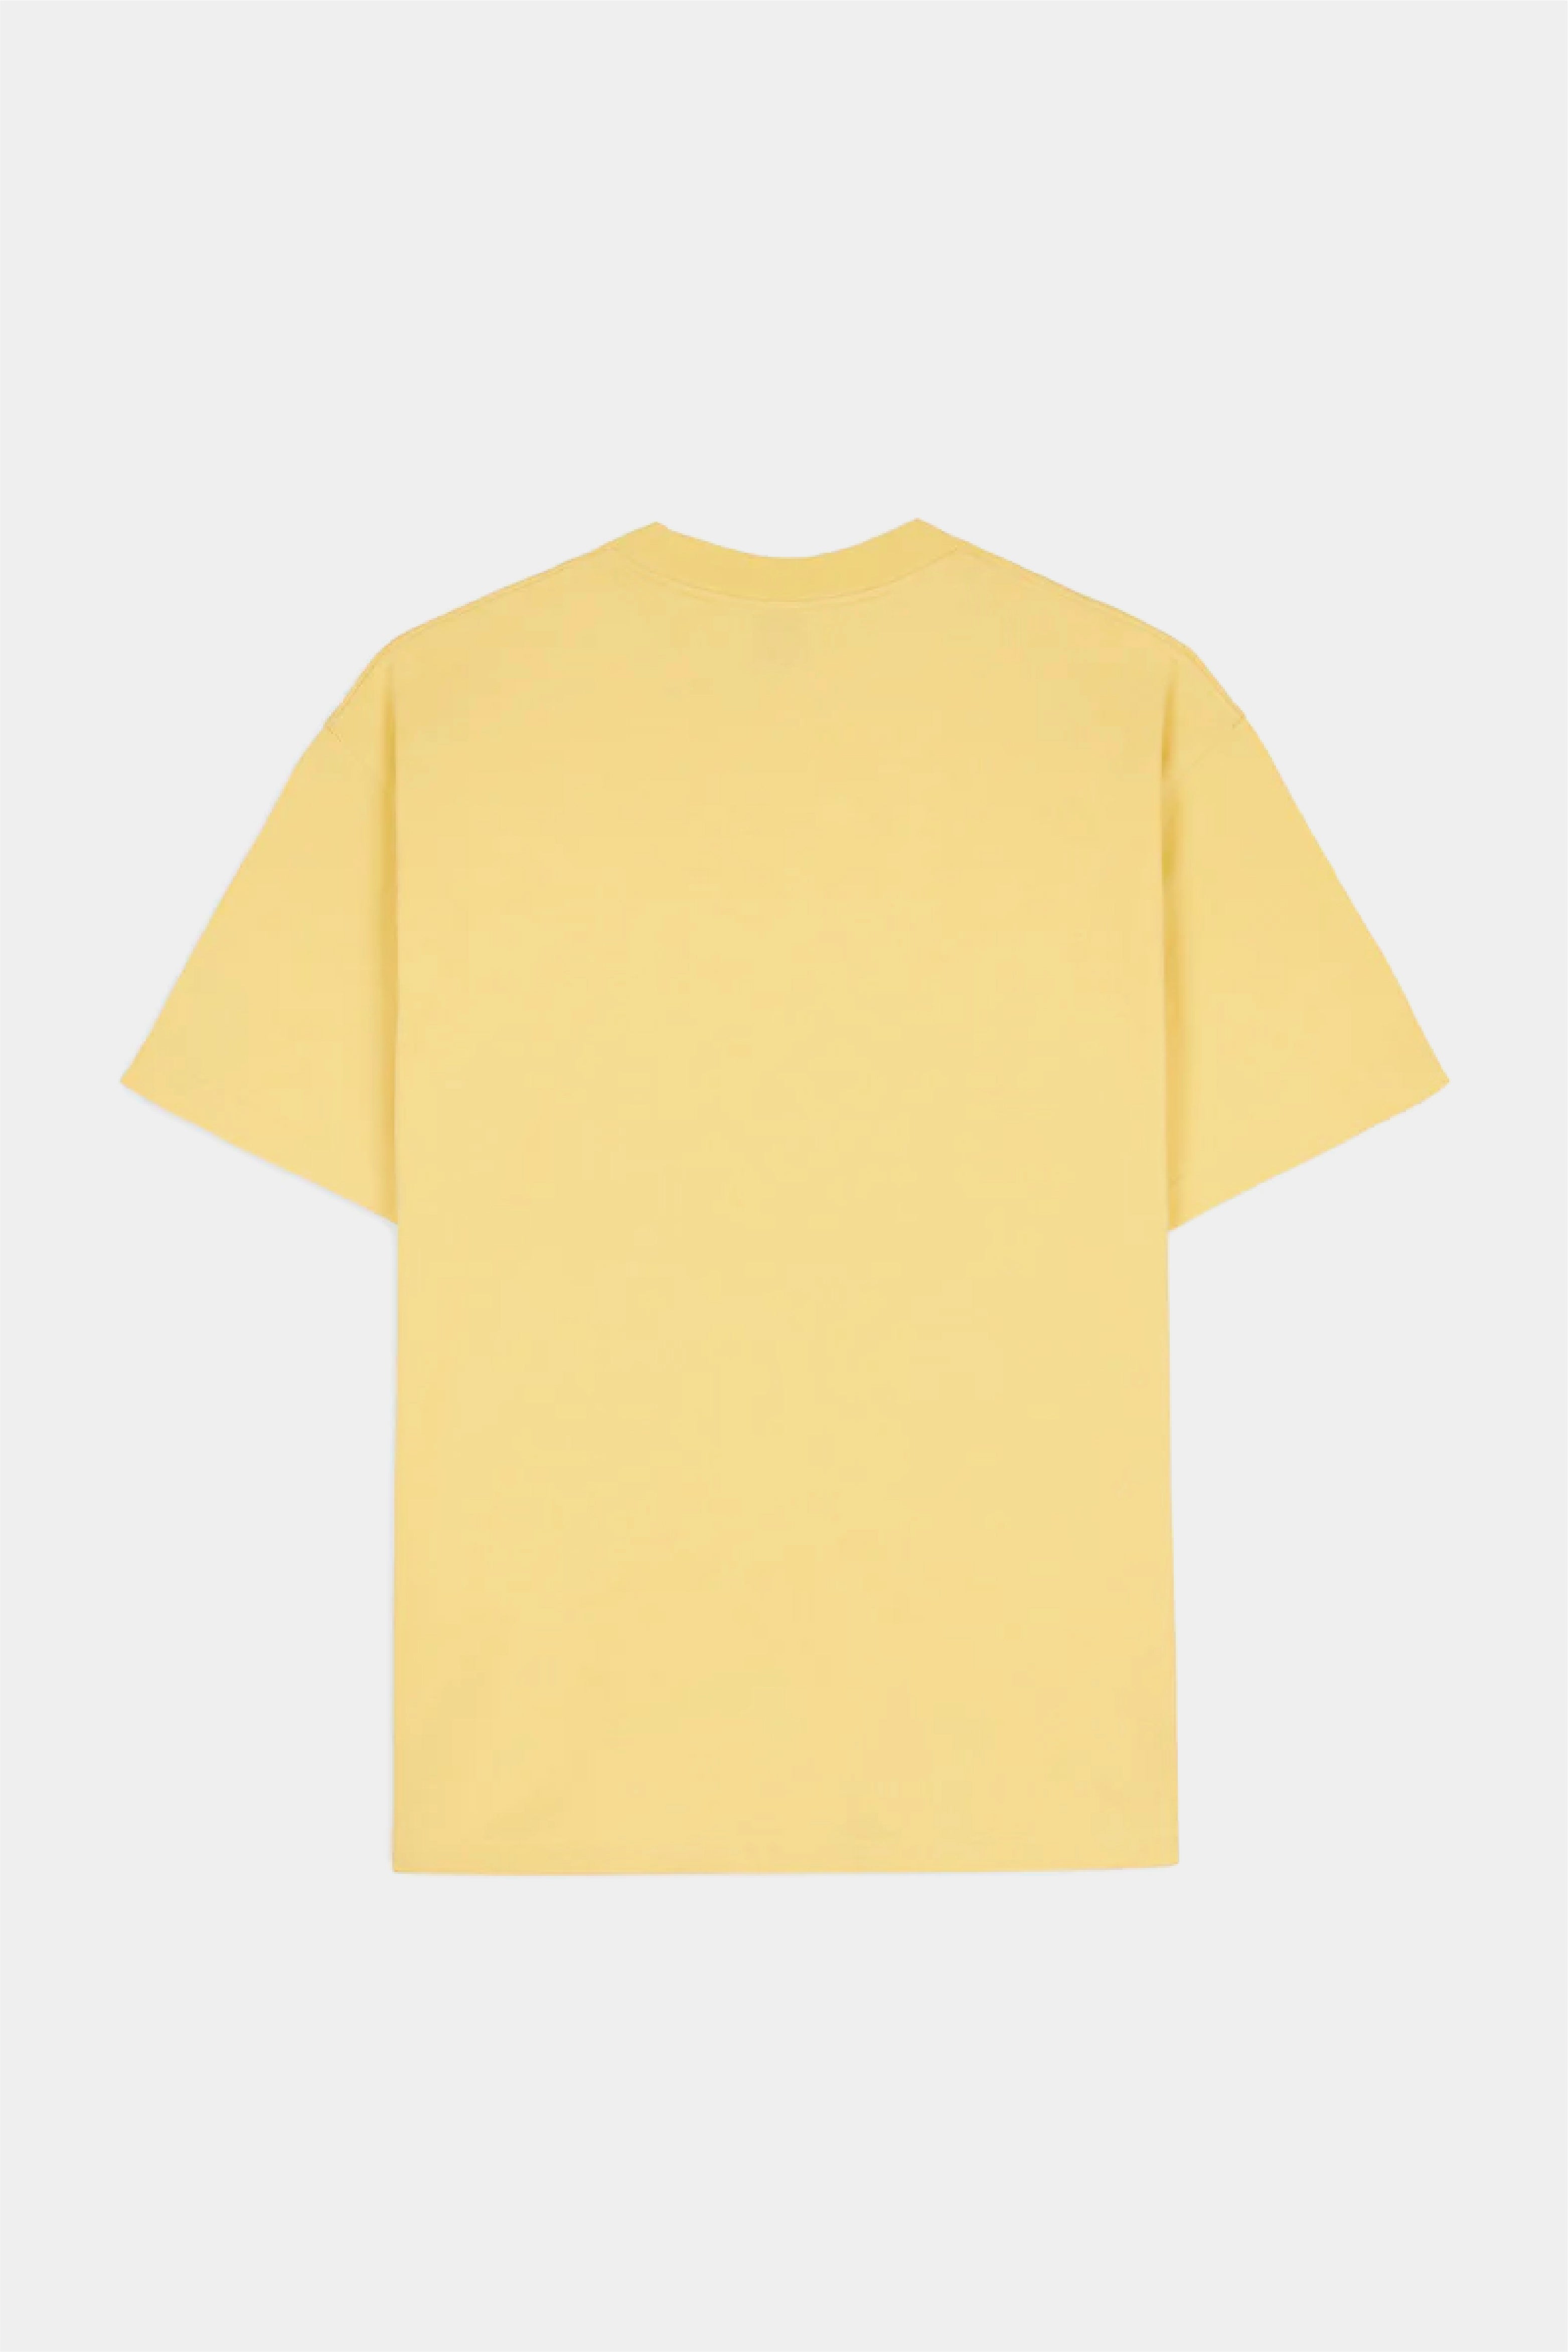 Selectshop FRAME - BRAIN DEAD Calisthenics Tee T-Shirts Dubai